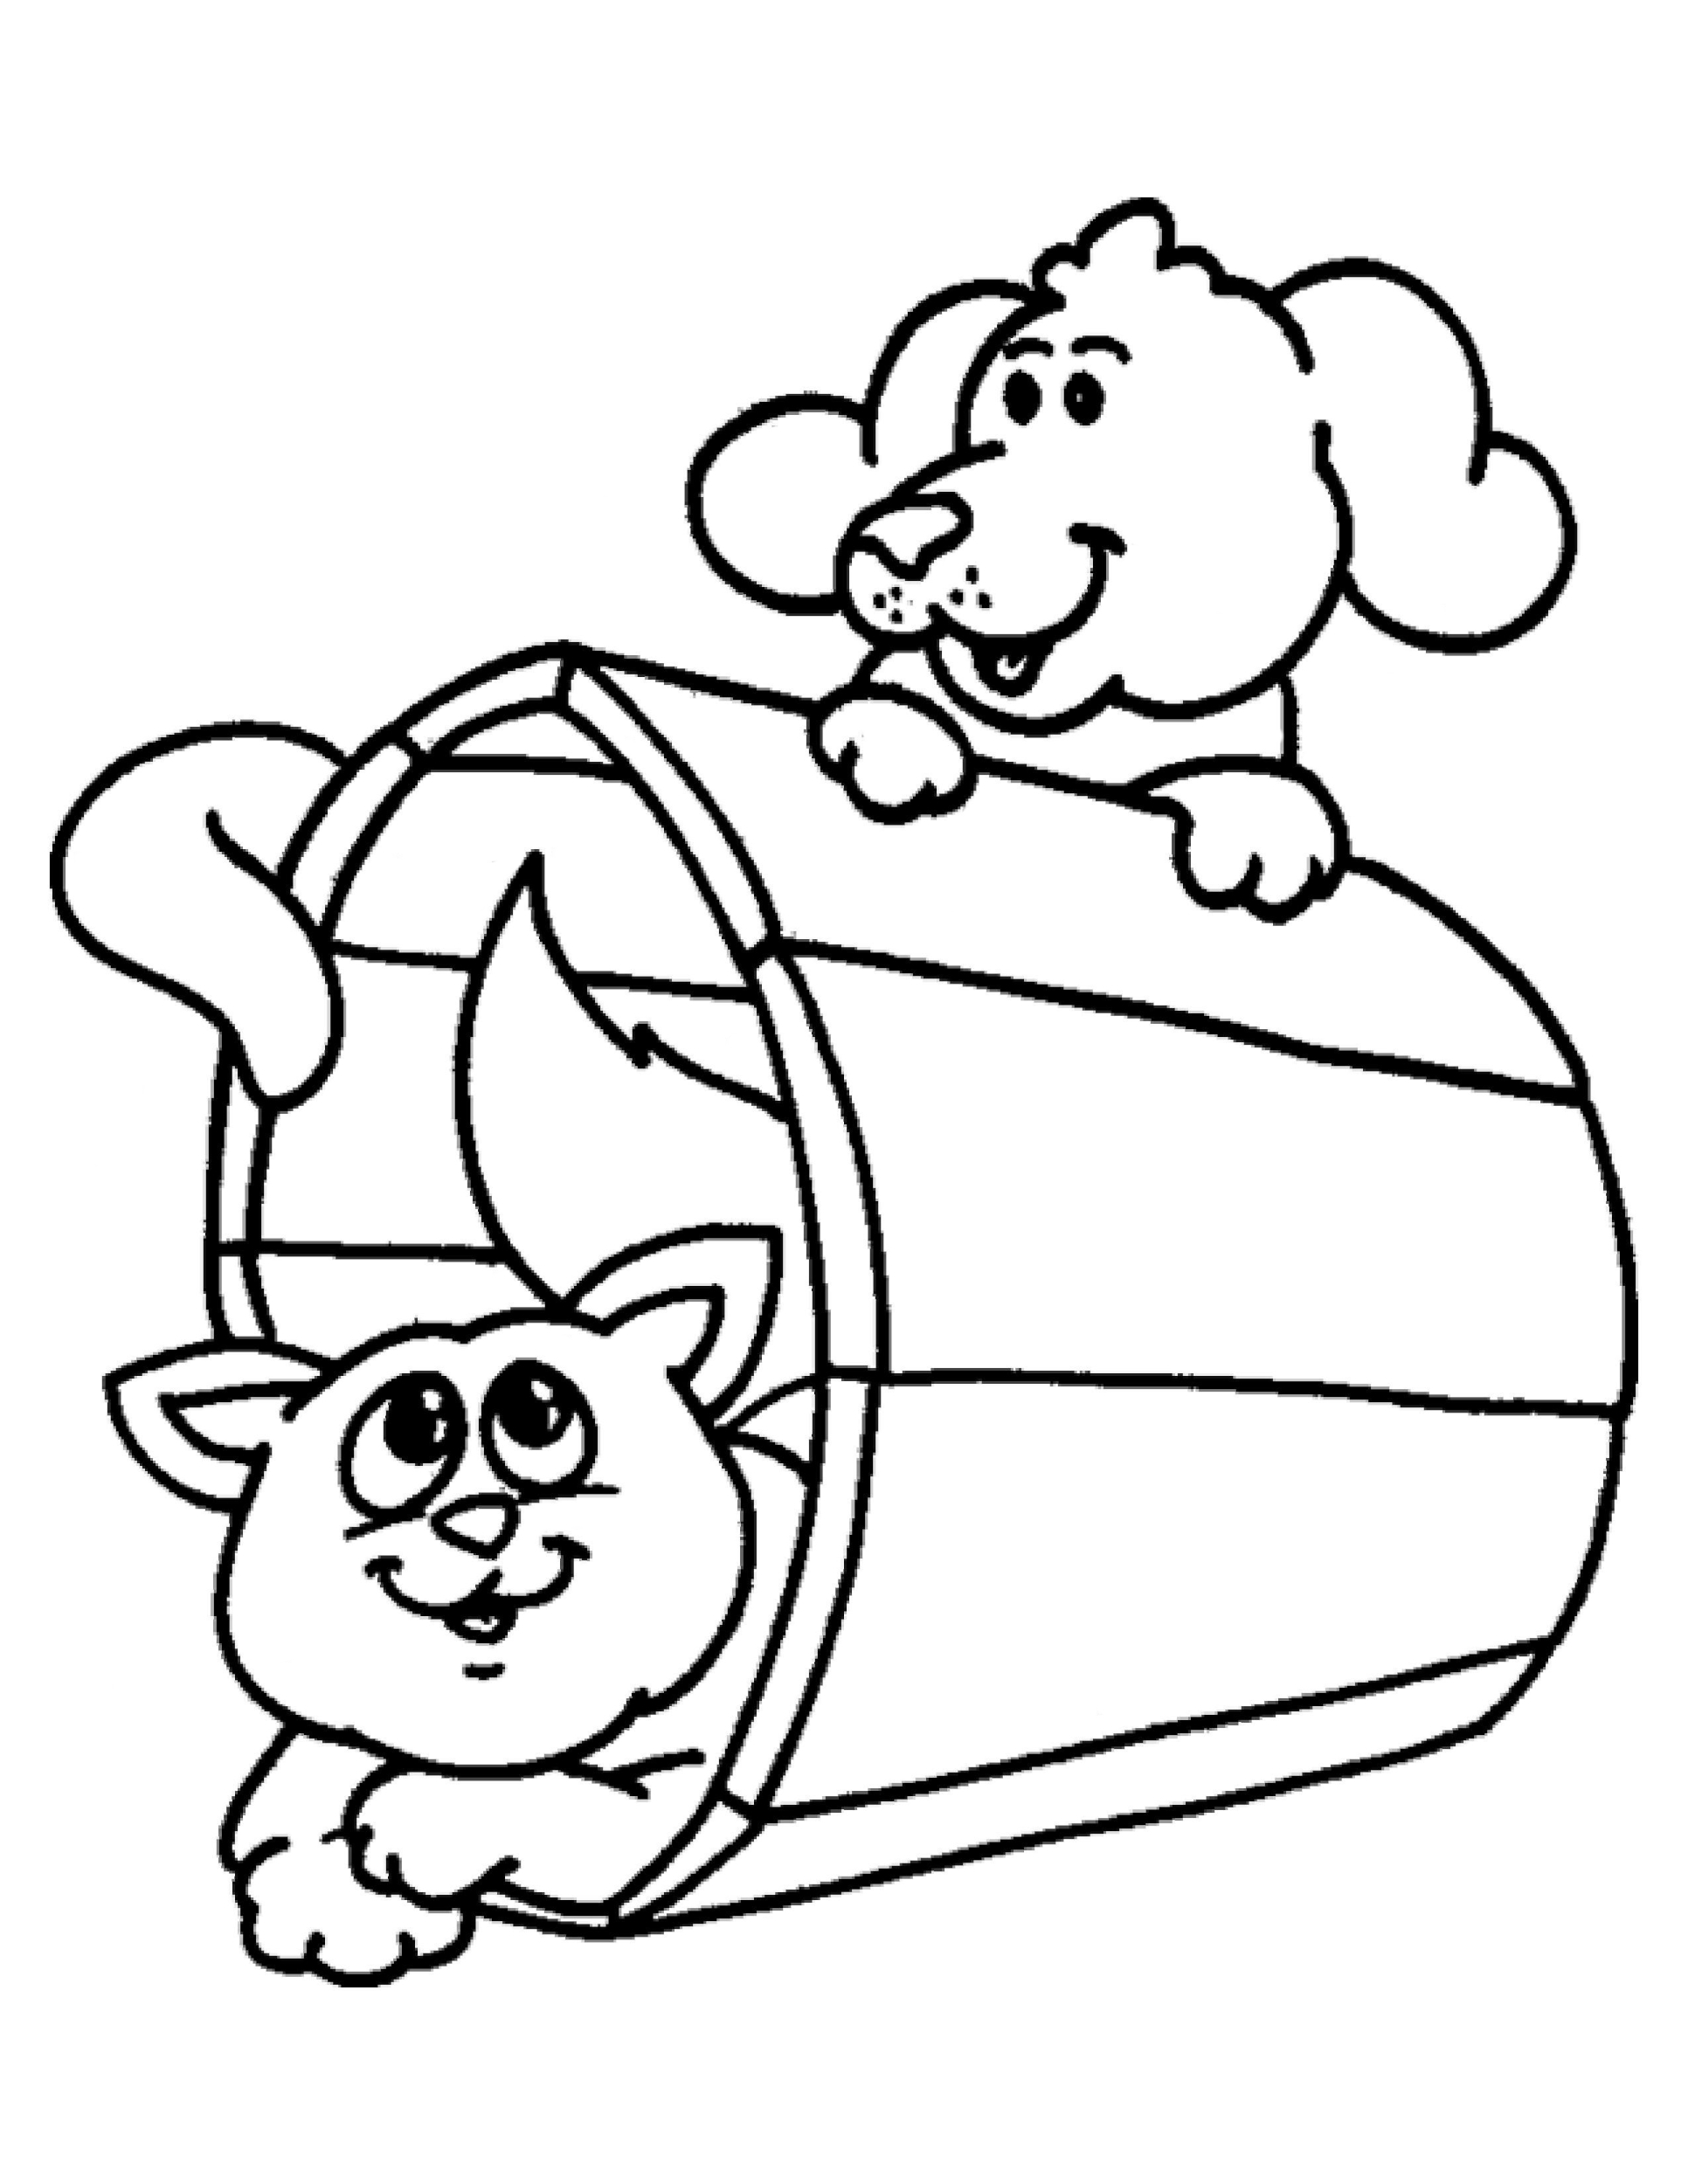 Раскраска Собака и кошка в бочке